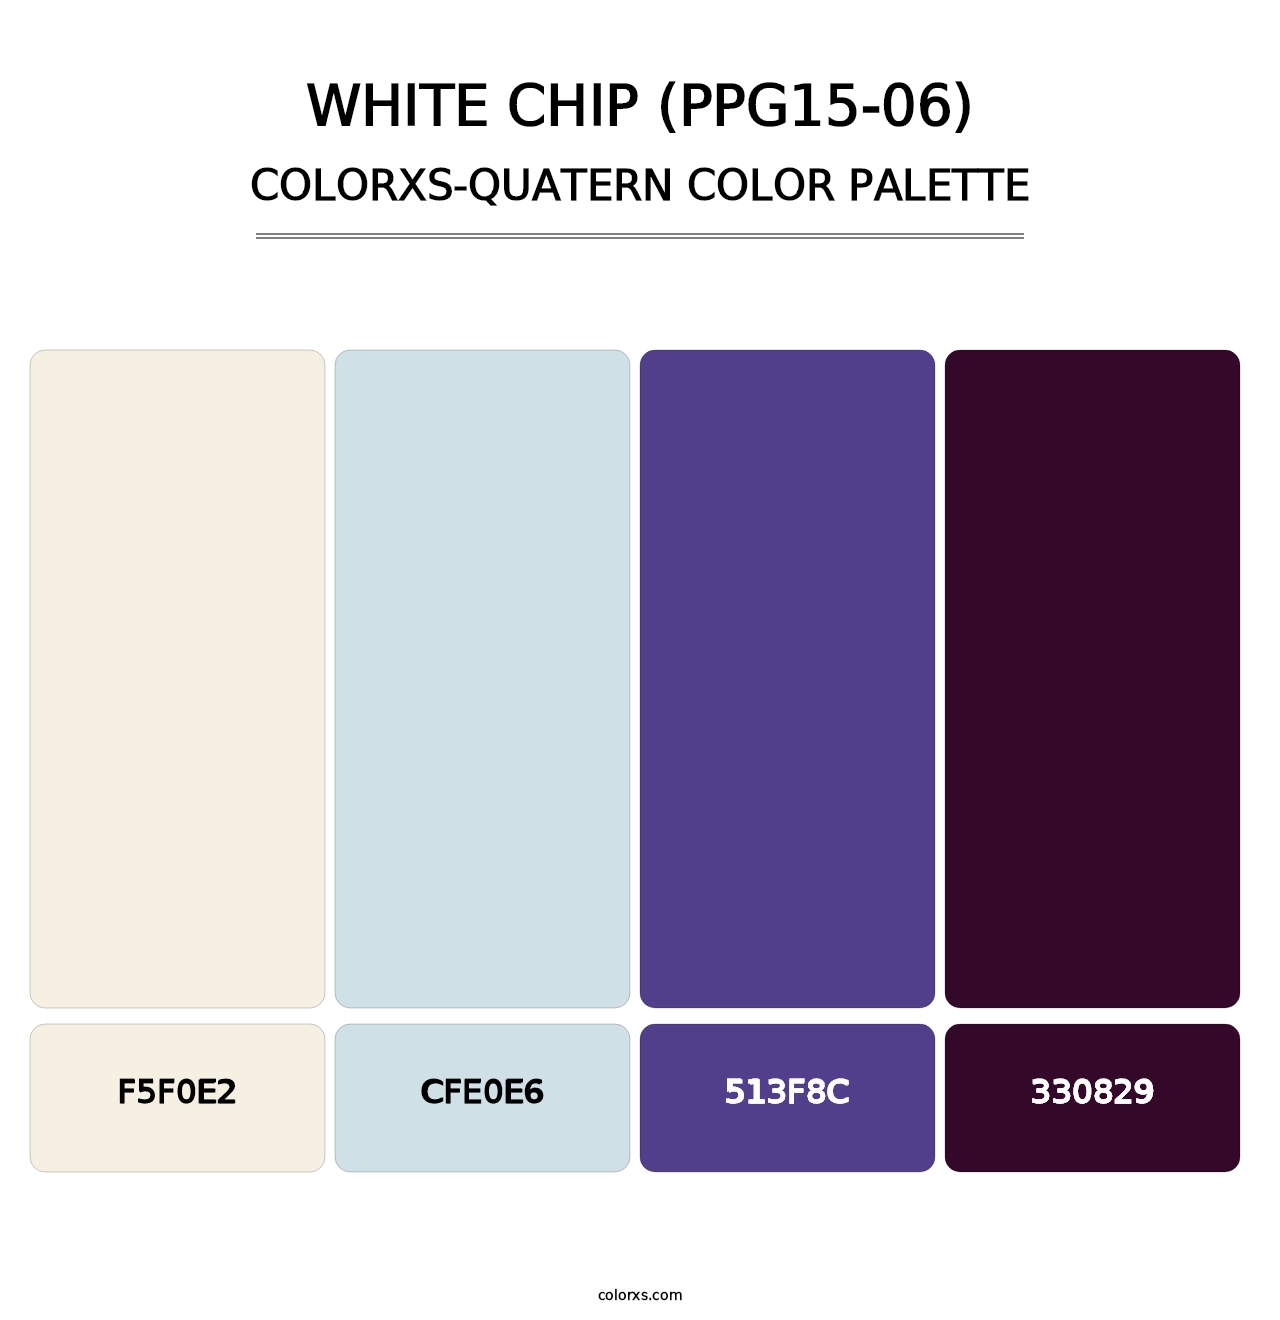 White Chip (PPG15-06) - Colorxs Quatern Palette